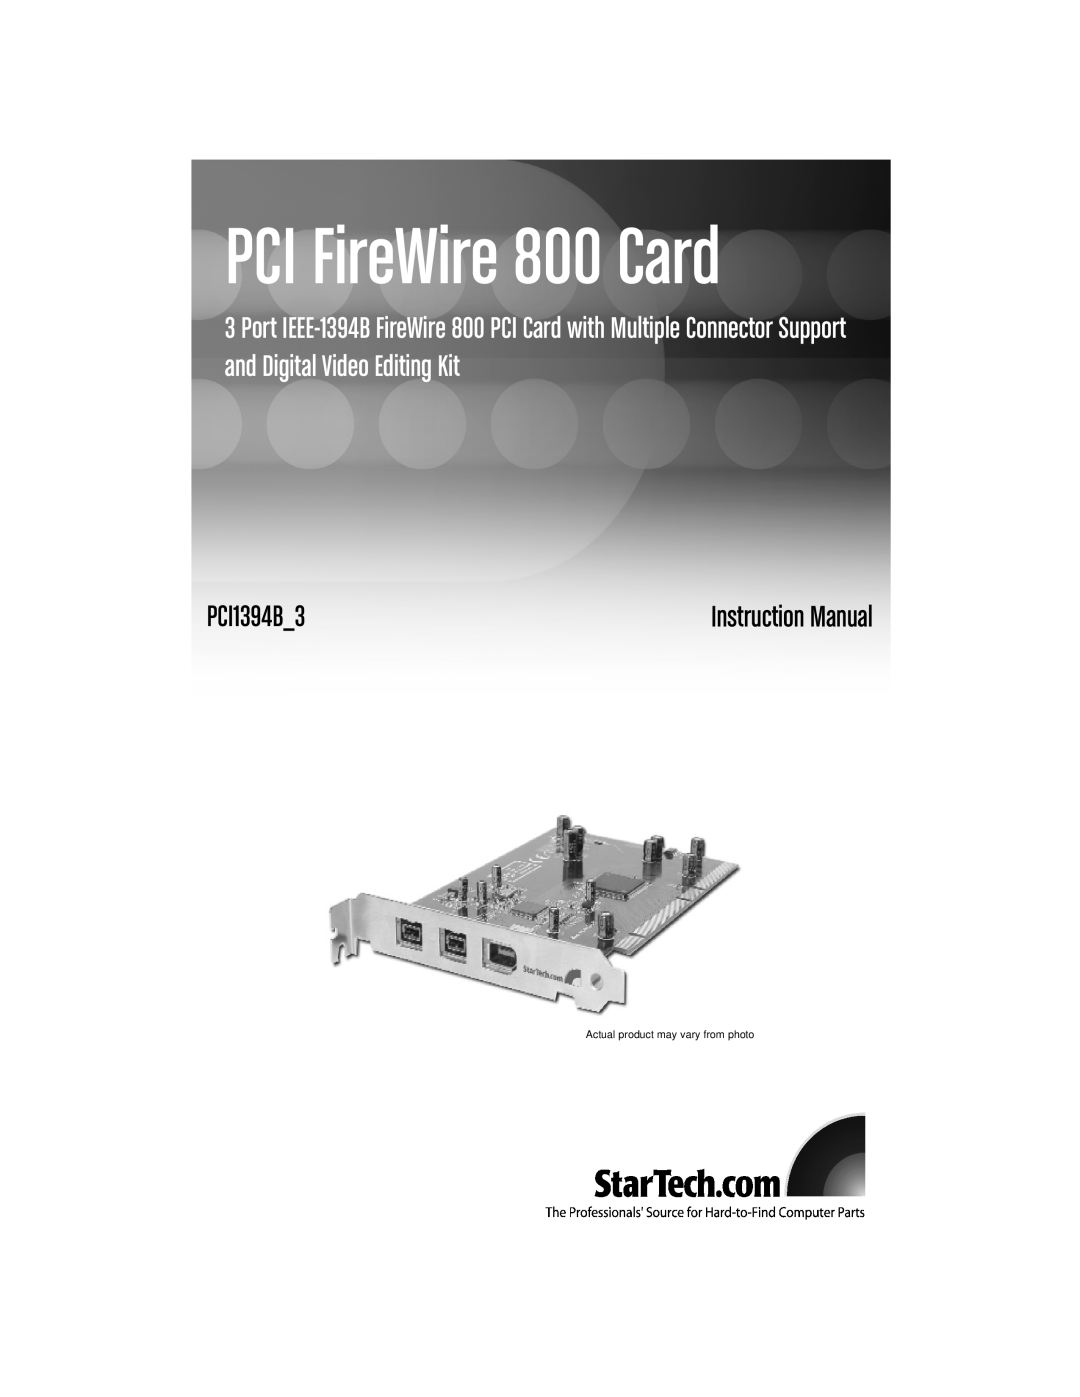 StarTech.com PCI1394B_3 instruction manual PCI FireWire 800 Card, PCI1394B3, Instruction Manual 